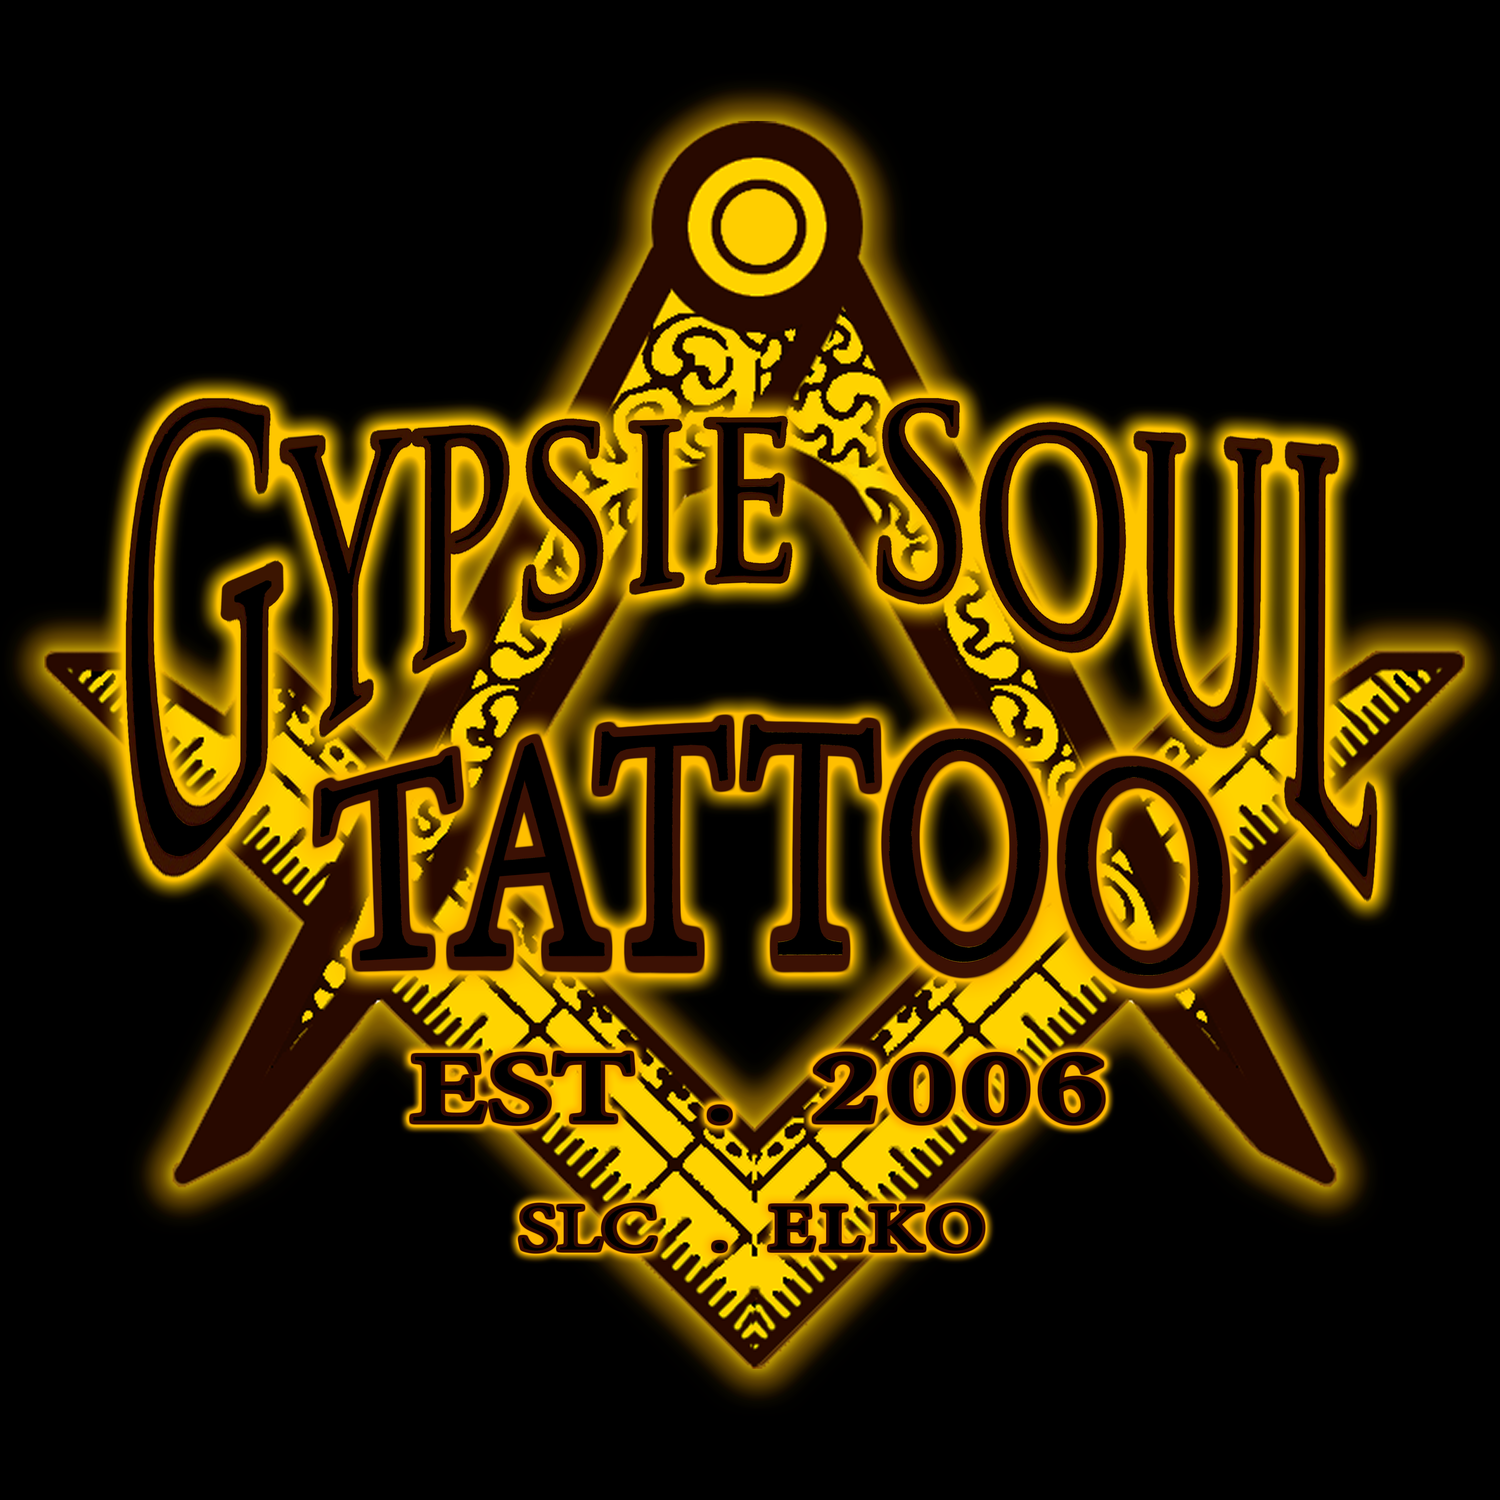 Tim Hudson — Gypsie Soul Tattoo